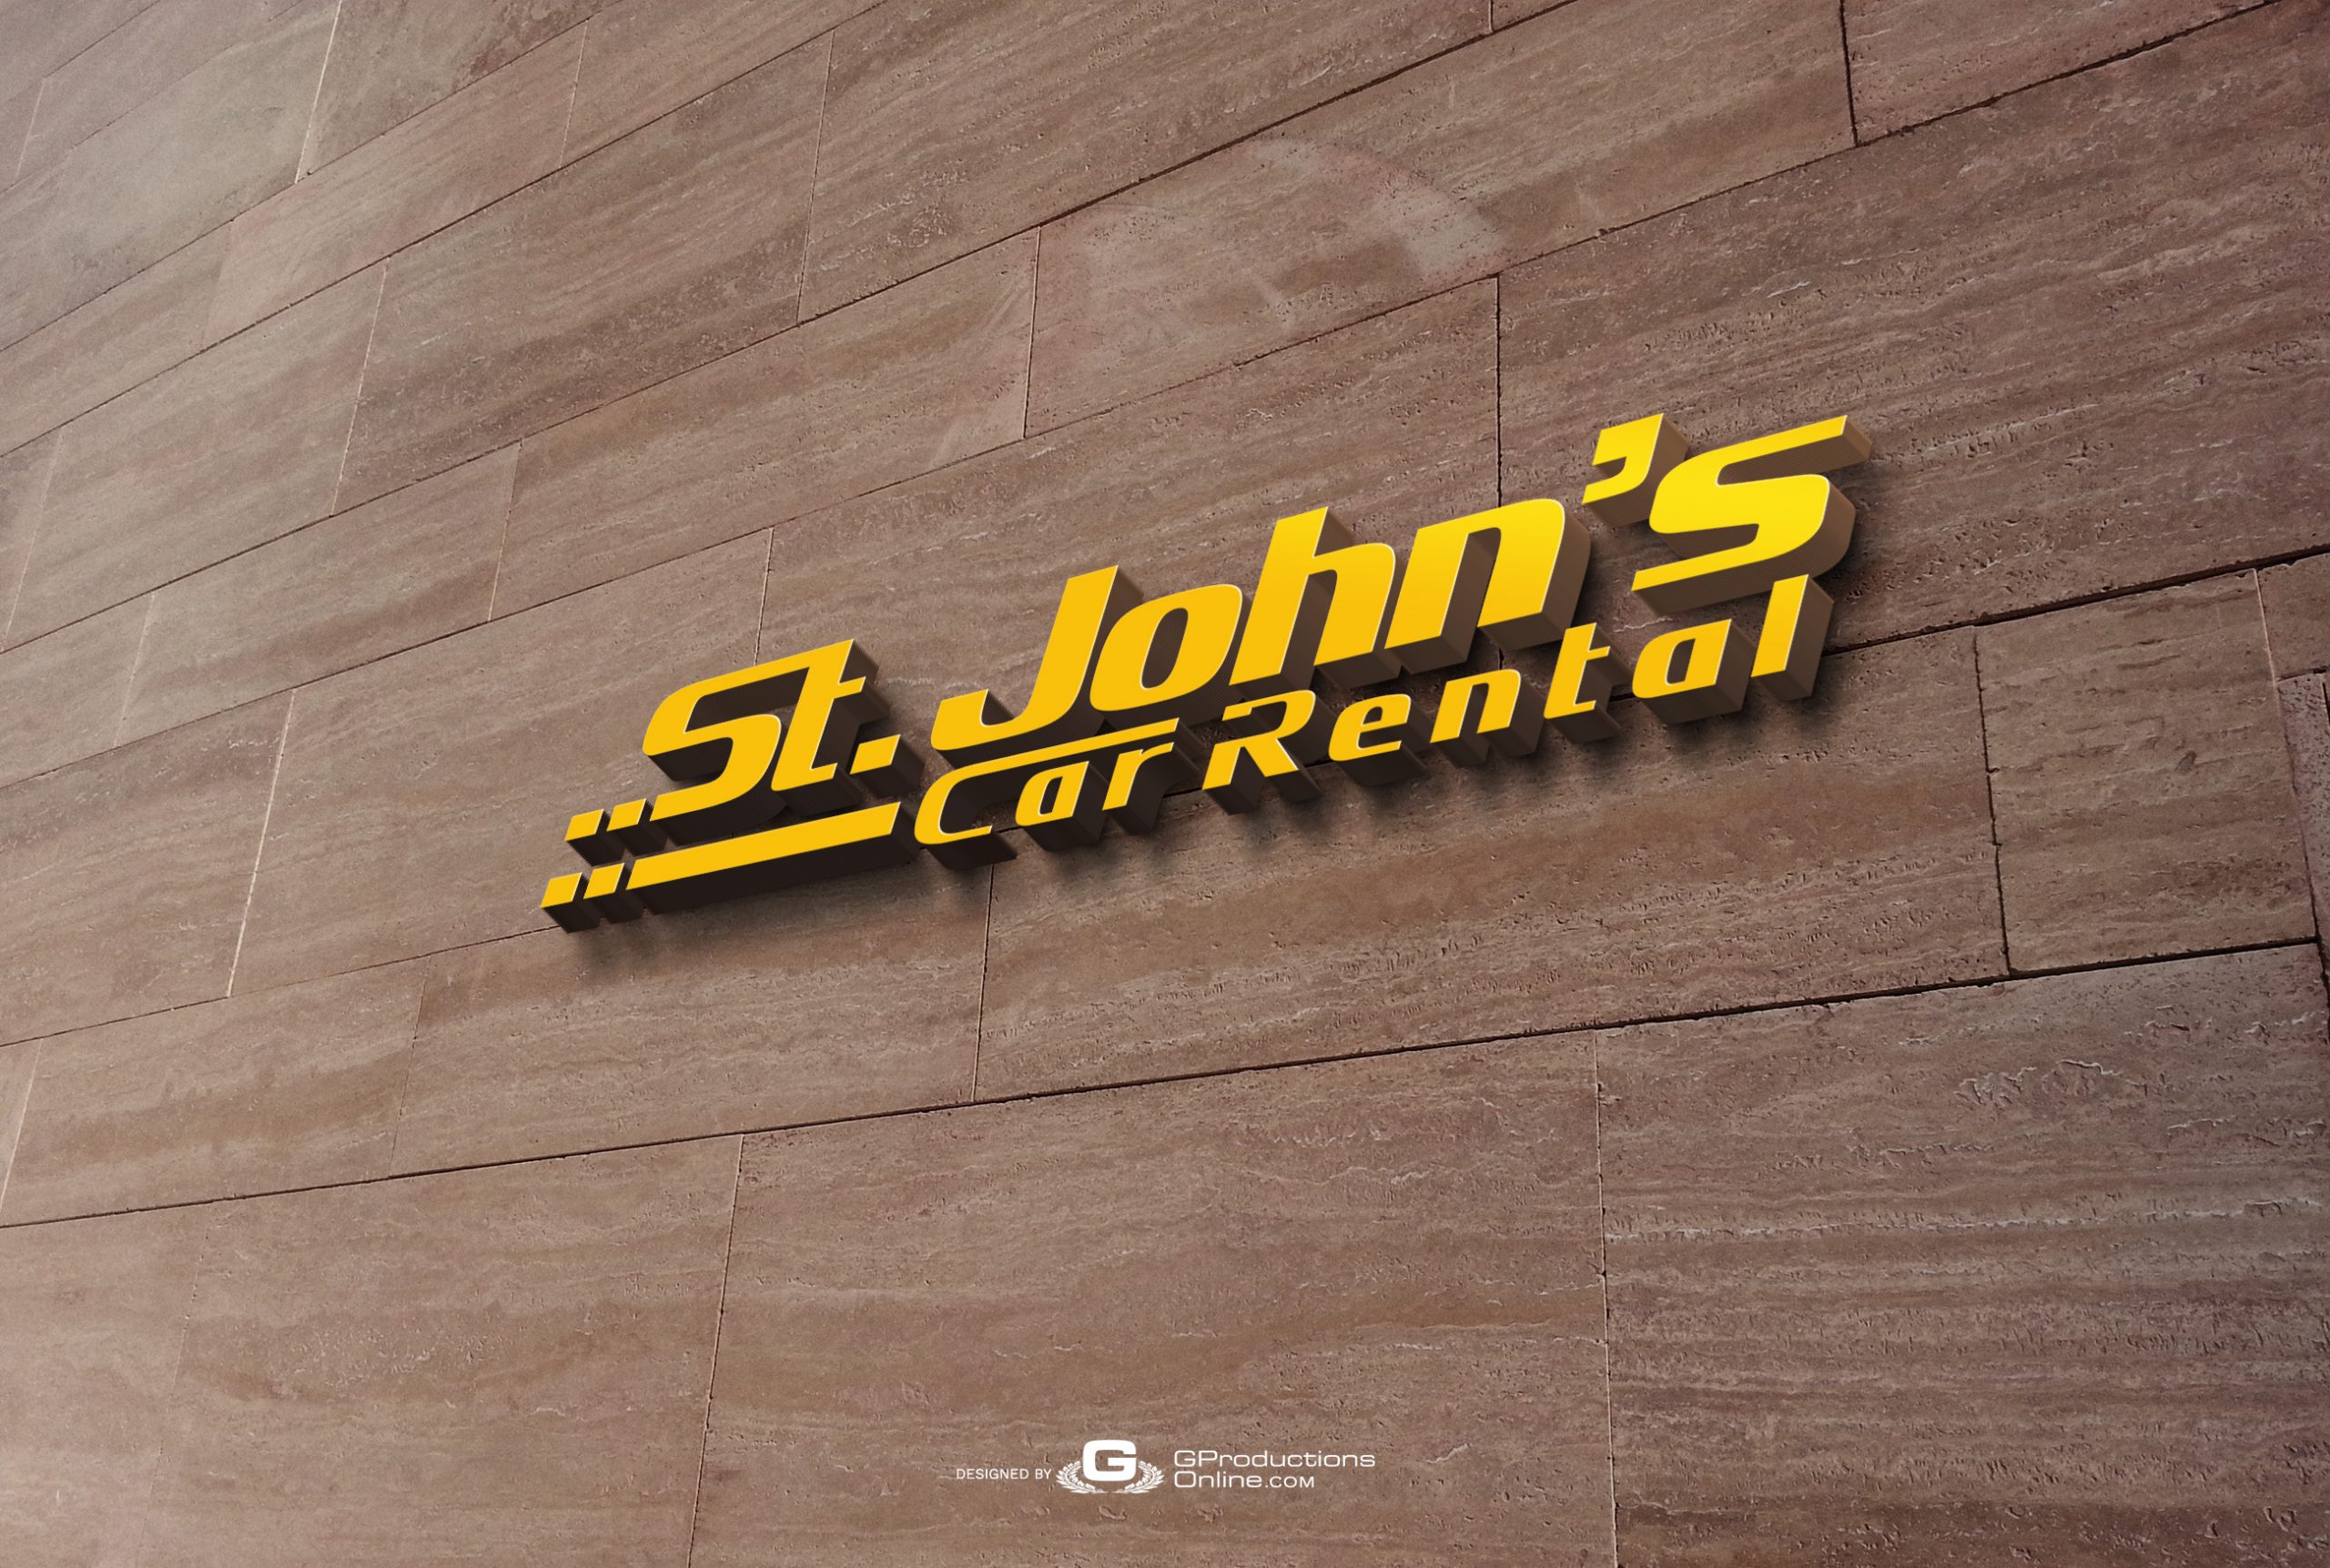 St-Johns-Car-Rental_150721-Gift